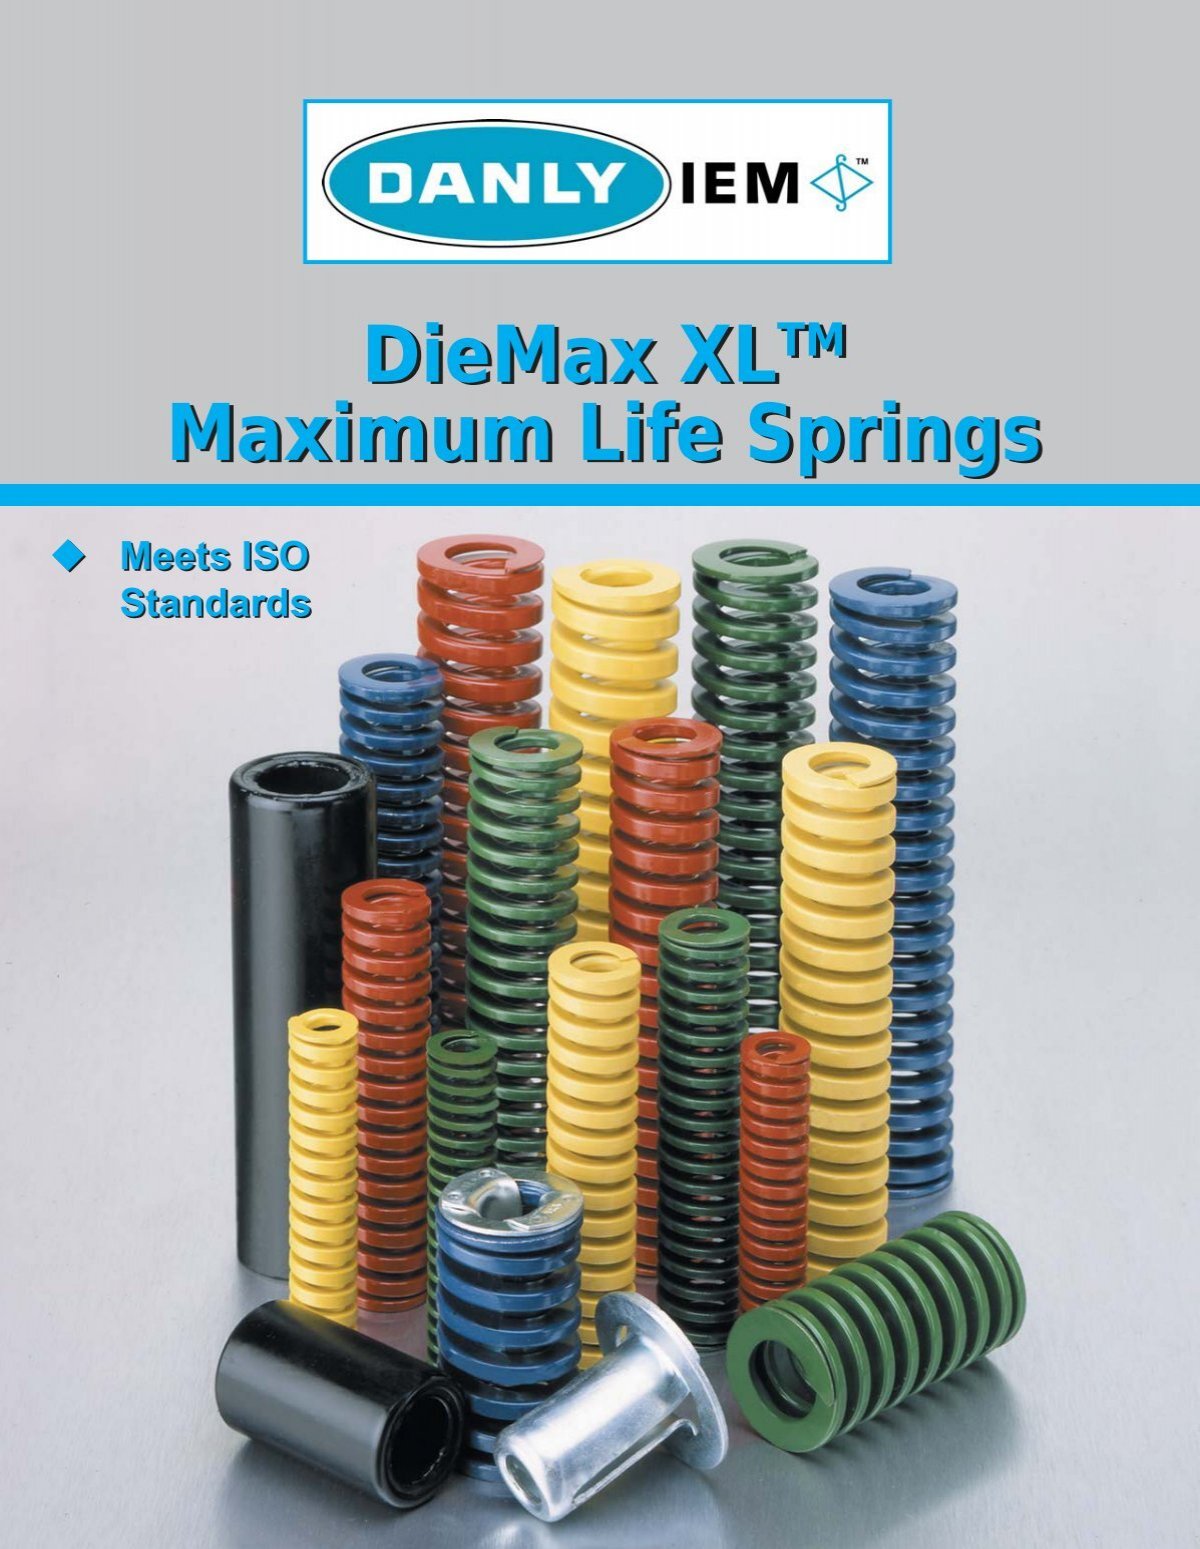 diemax-xl-maximum-life-springs-danly-iem